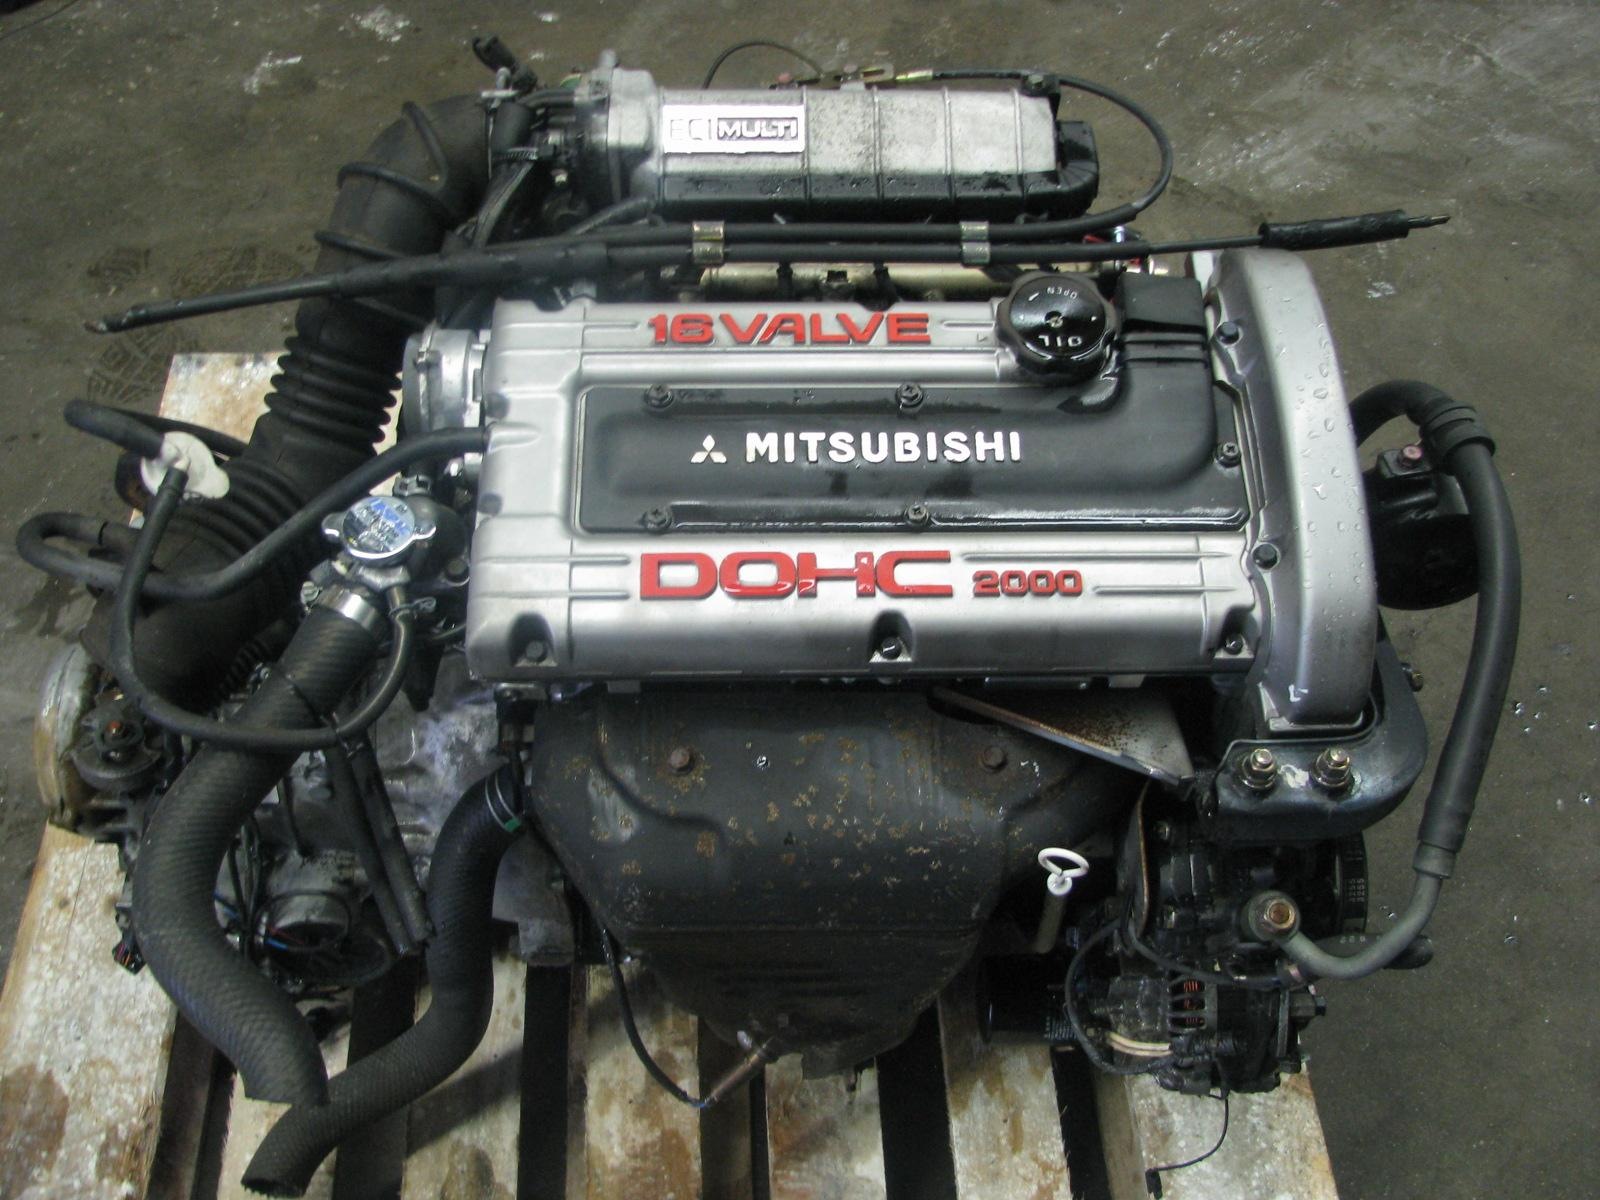 Мицубиси 4g63. Mitsubishi Galant 2.0 4g63. Мотор Митсубиси 4g63. Двигатель Mitsubishi 4g63. Двигатель Mitsubishi 4g63t 2.0 л..